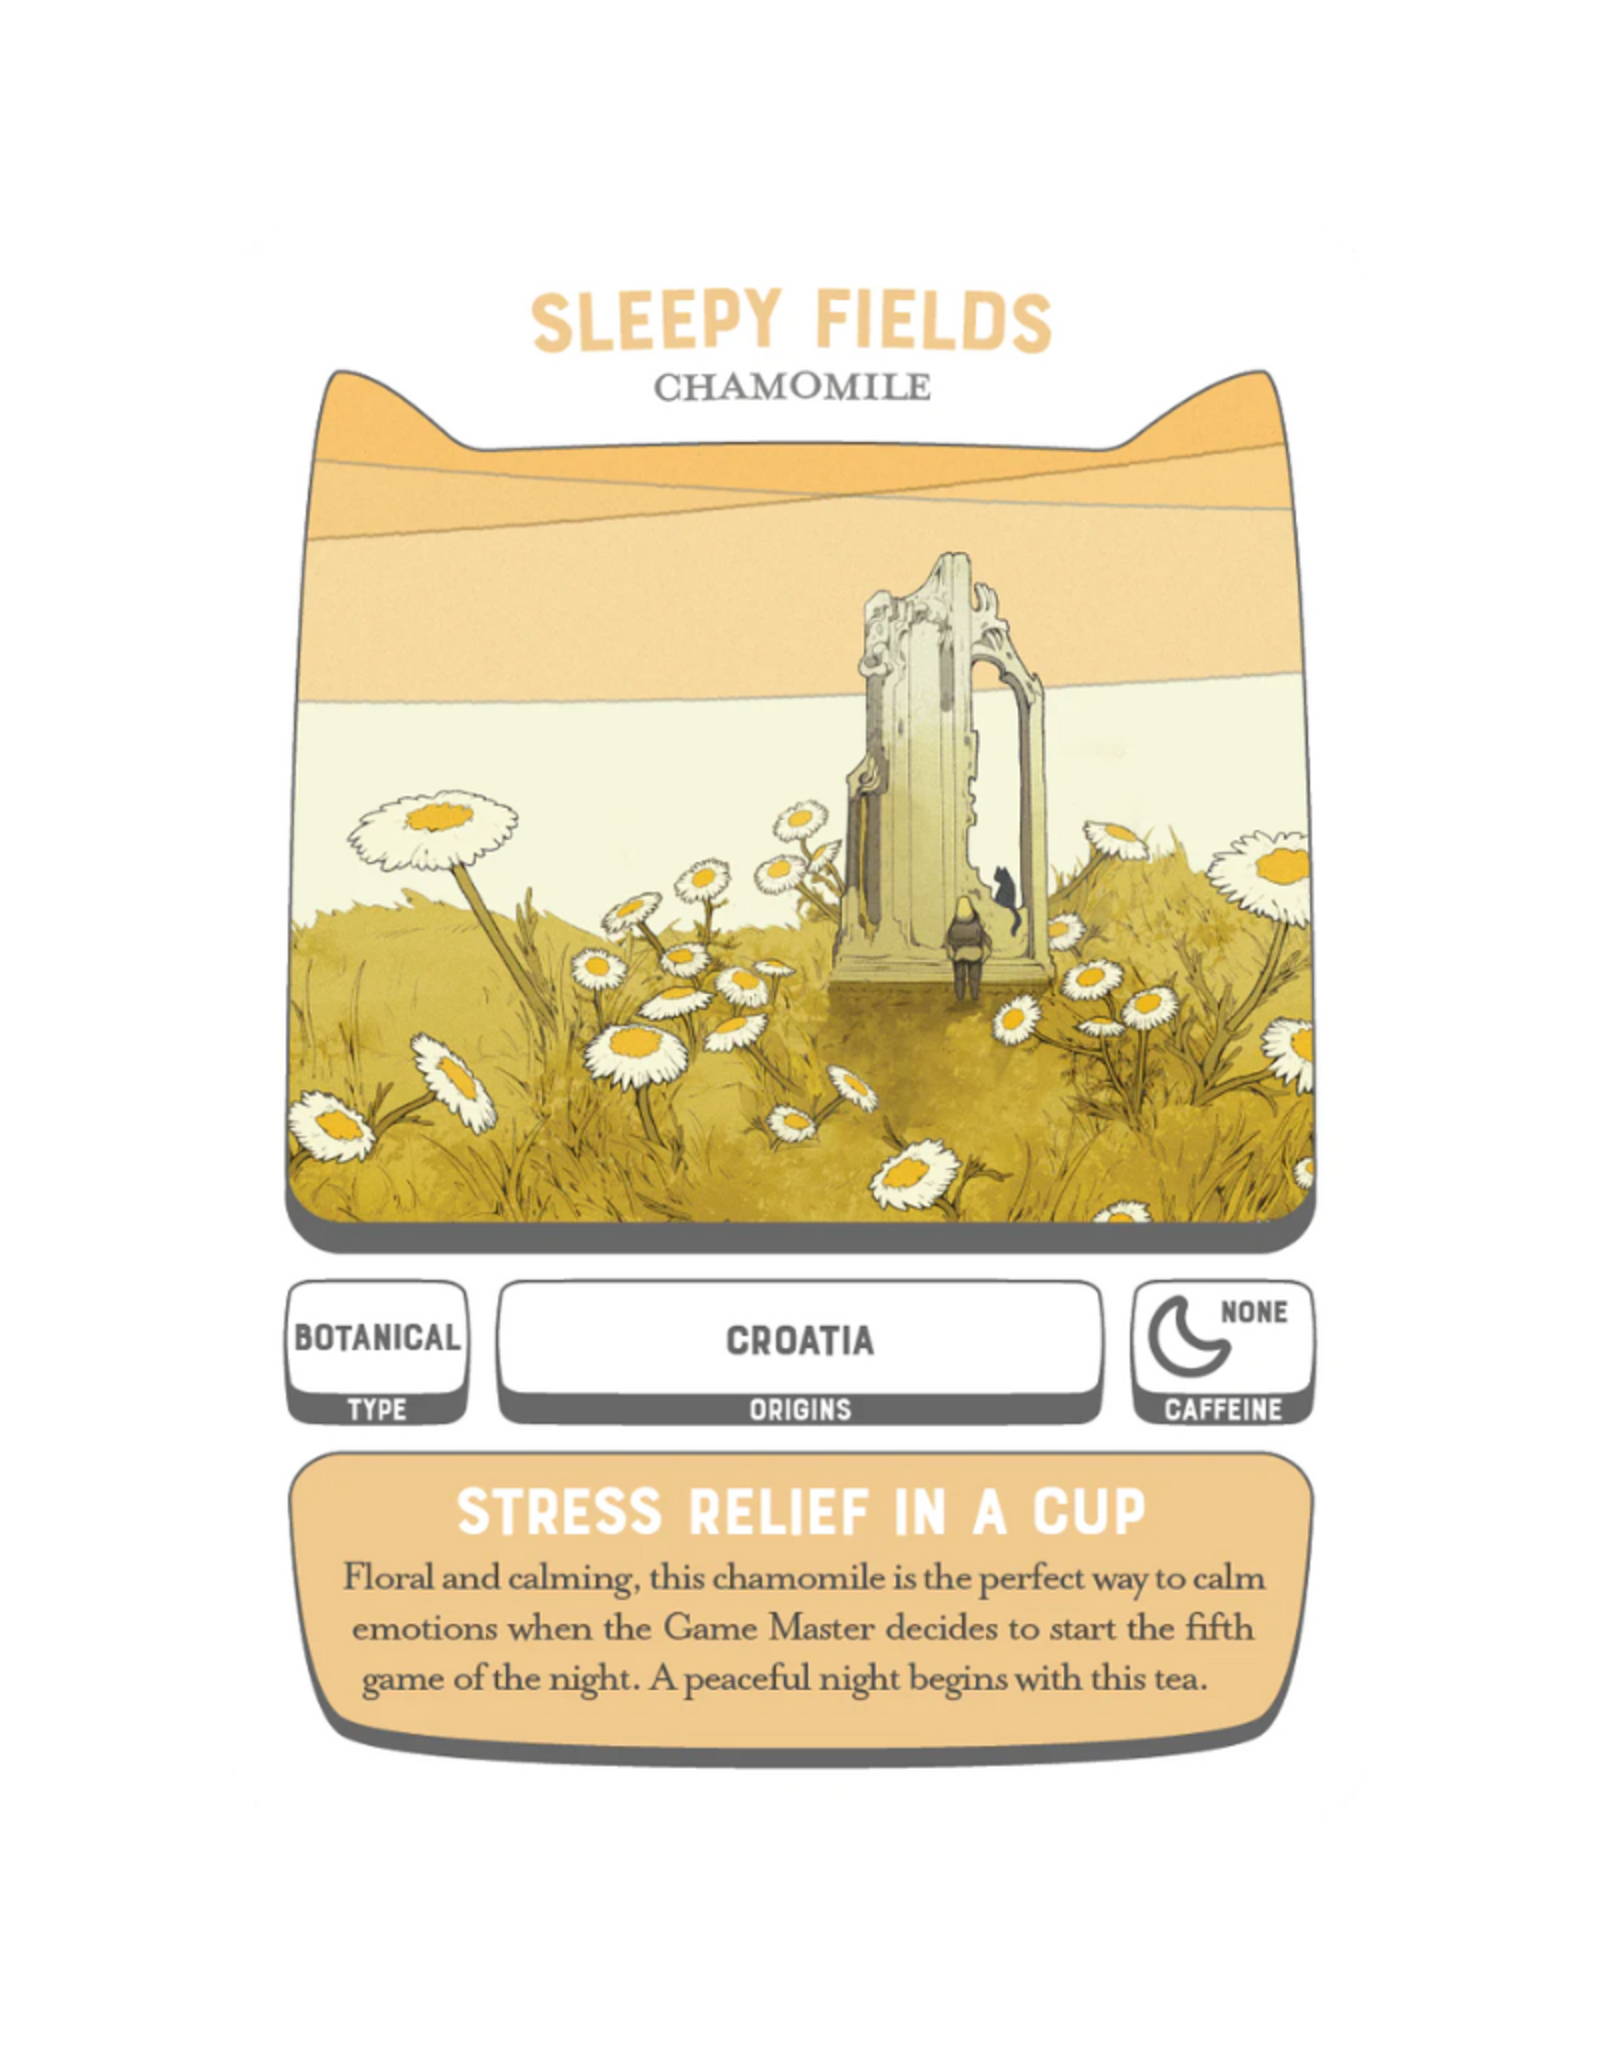 Many Worlds Tavern Loose Leaf Tea: Sleepy Fields (2.5oz/70g)